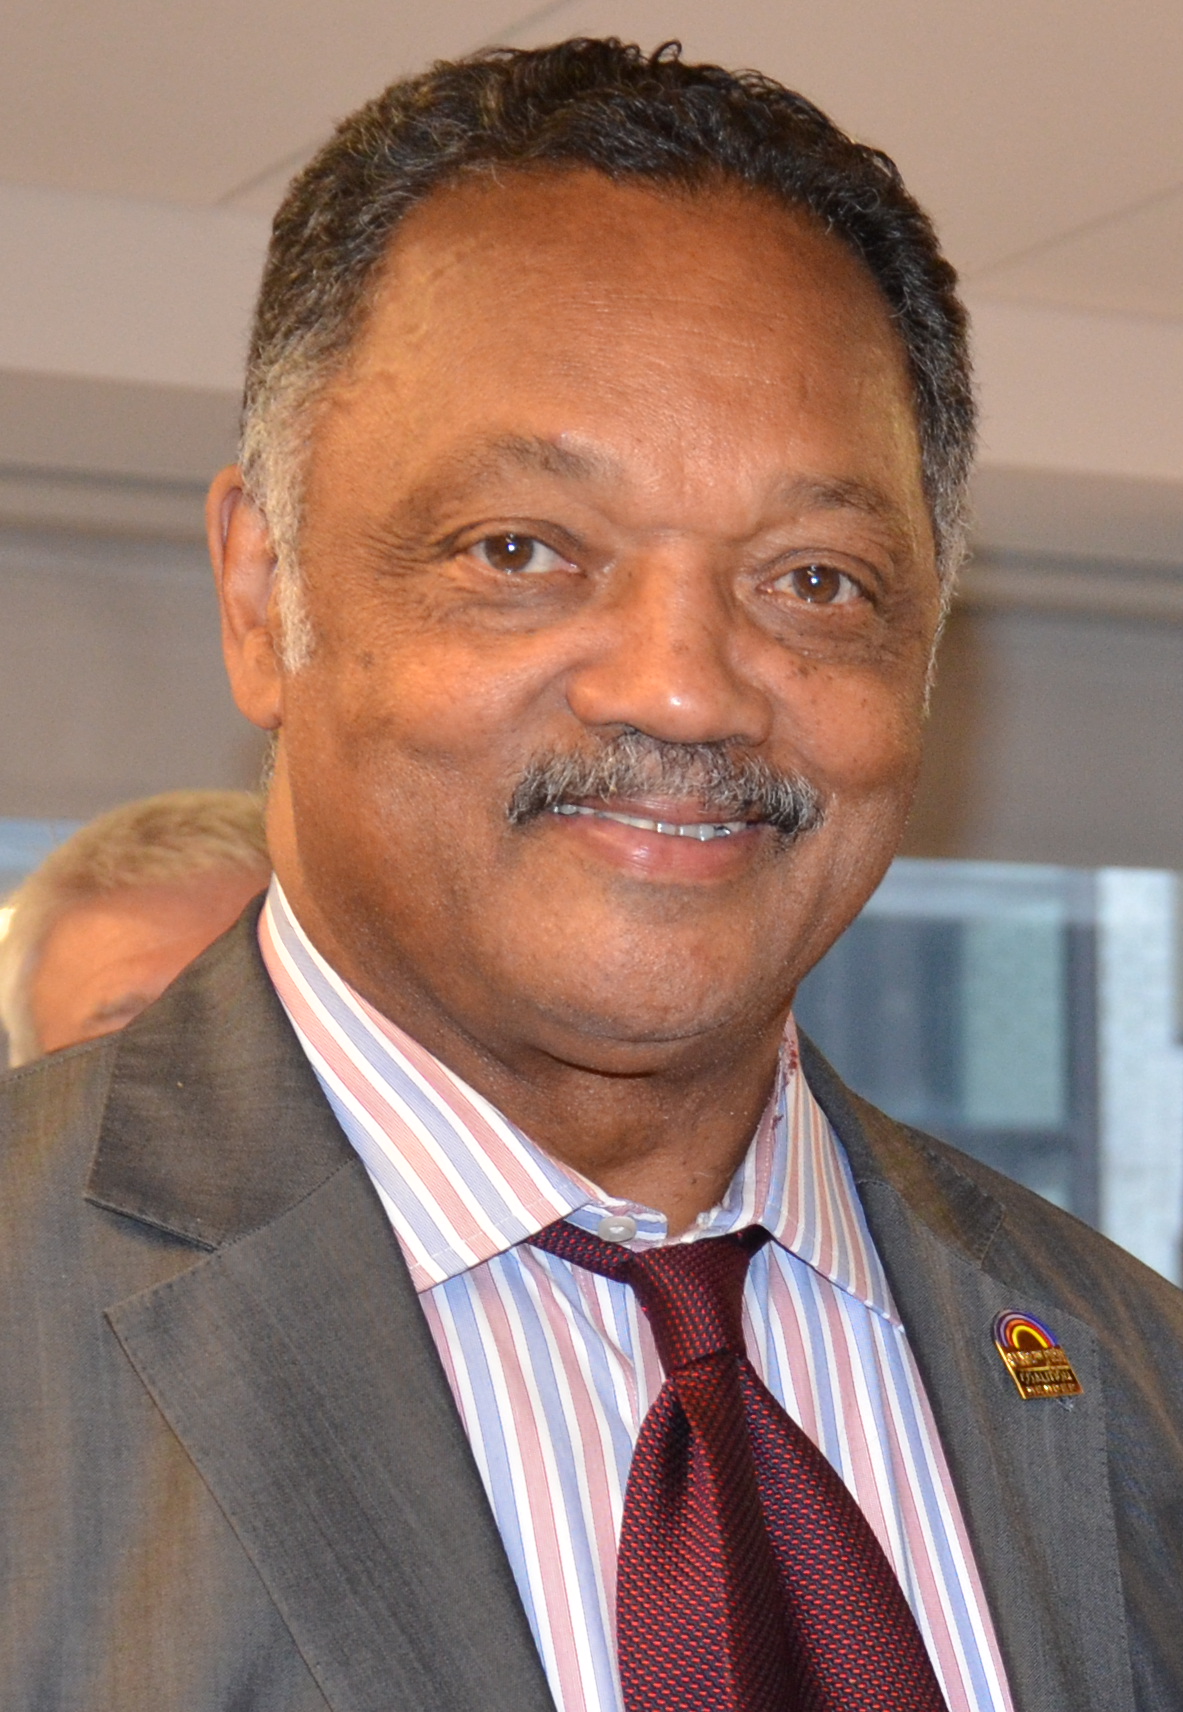 Jackson in 2013